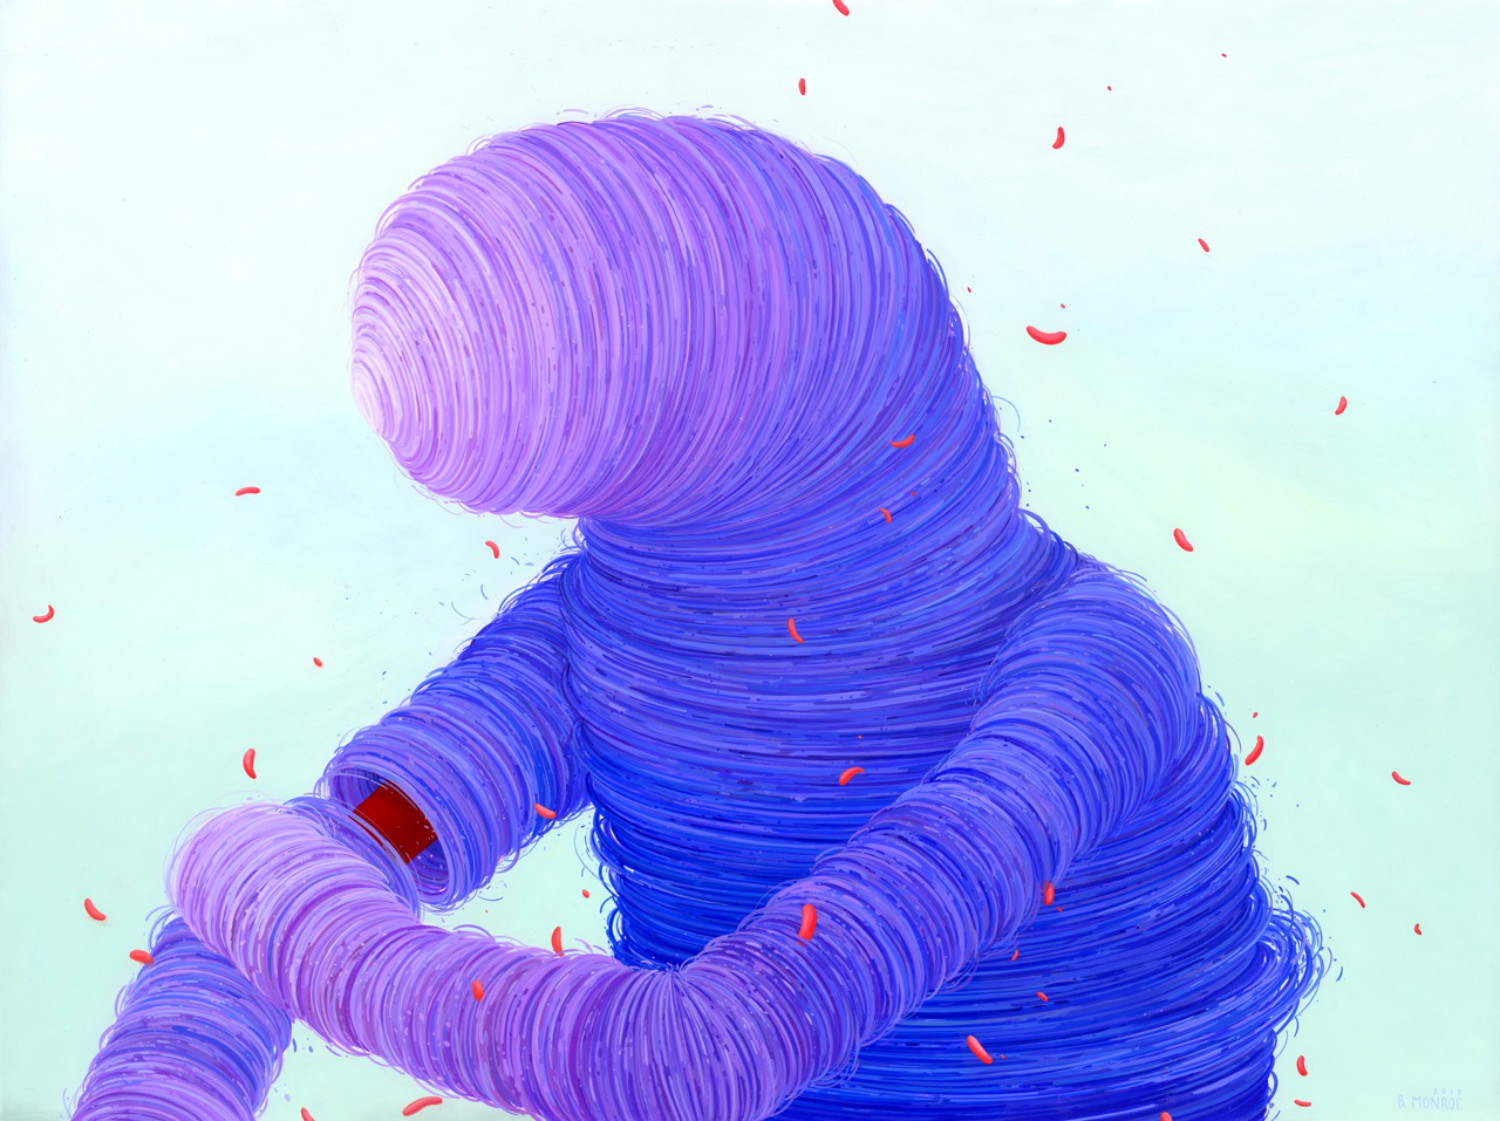 brendan monroe illustration blob colour surreal purple creature